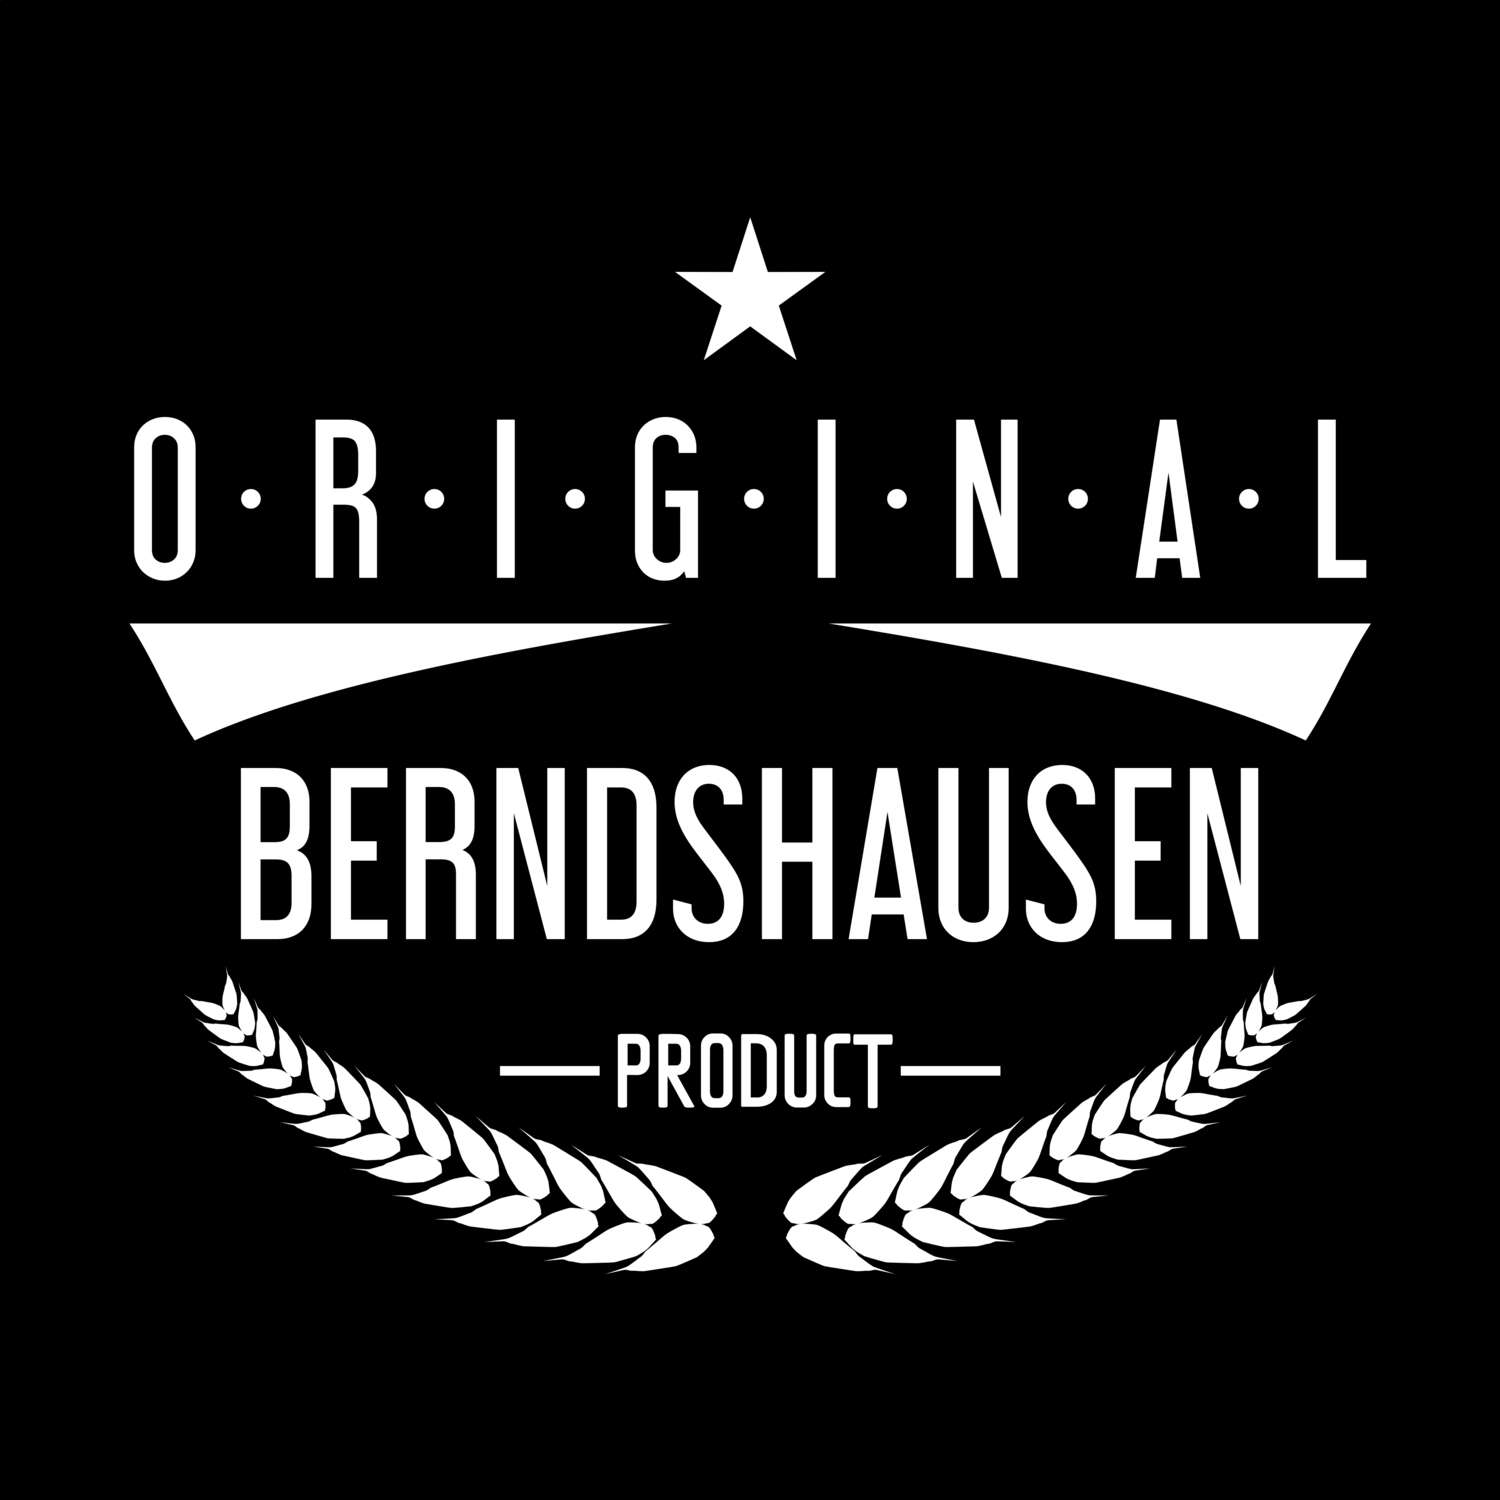 Berndshausen T-Shirt »Original Product«